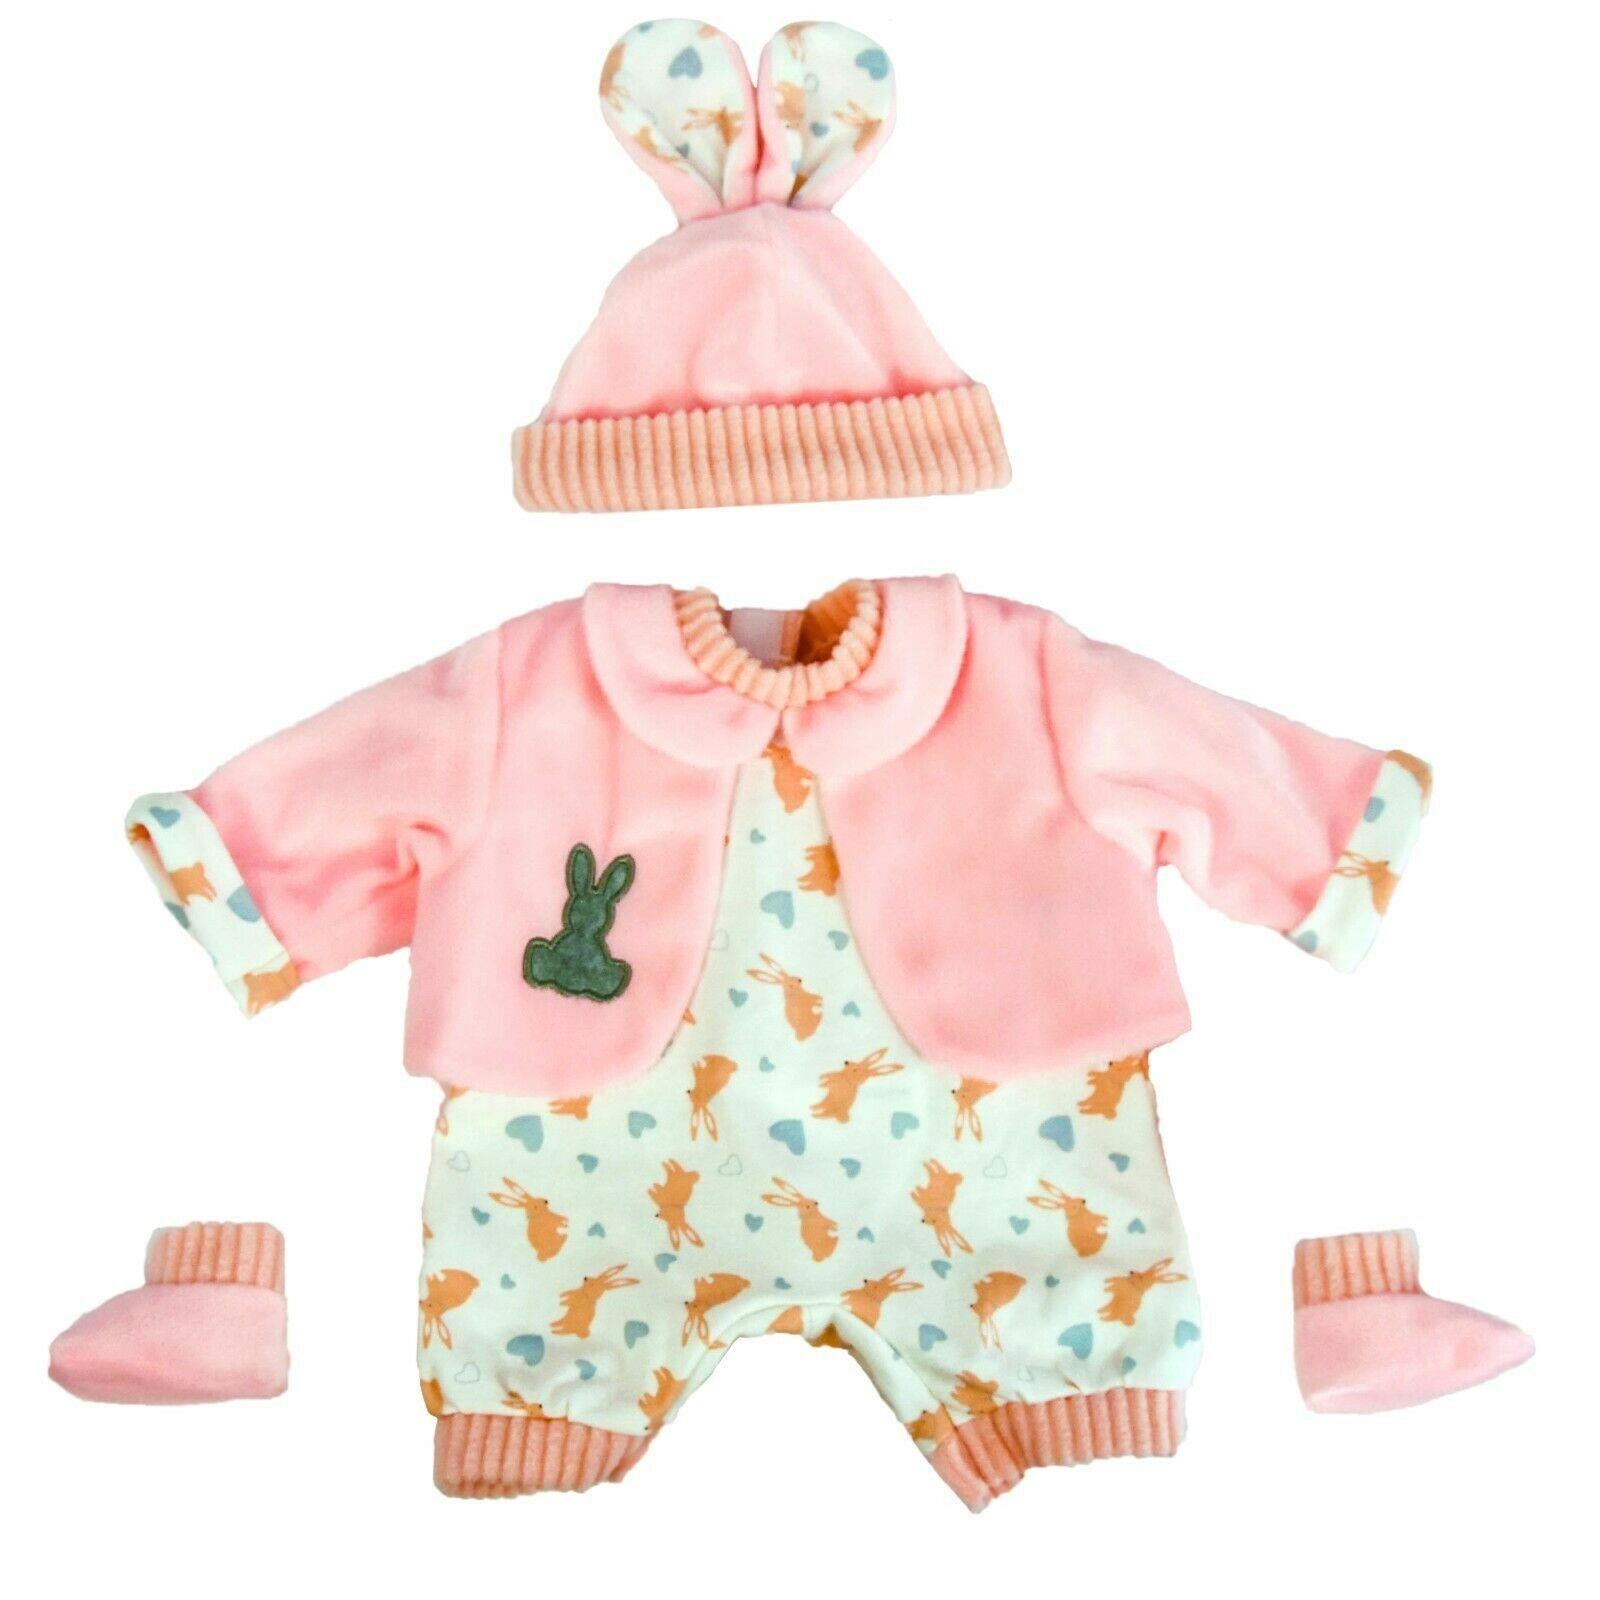 BiBi Outfits - Set of Two Doll (Pink Skirt & Pink Bunny) (45 cm / 18") by BiBi Doll - UKBuyZone